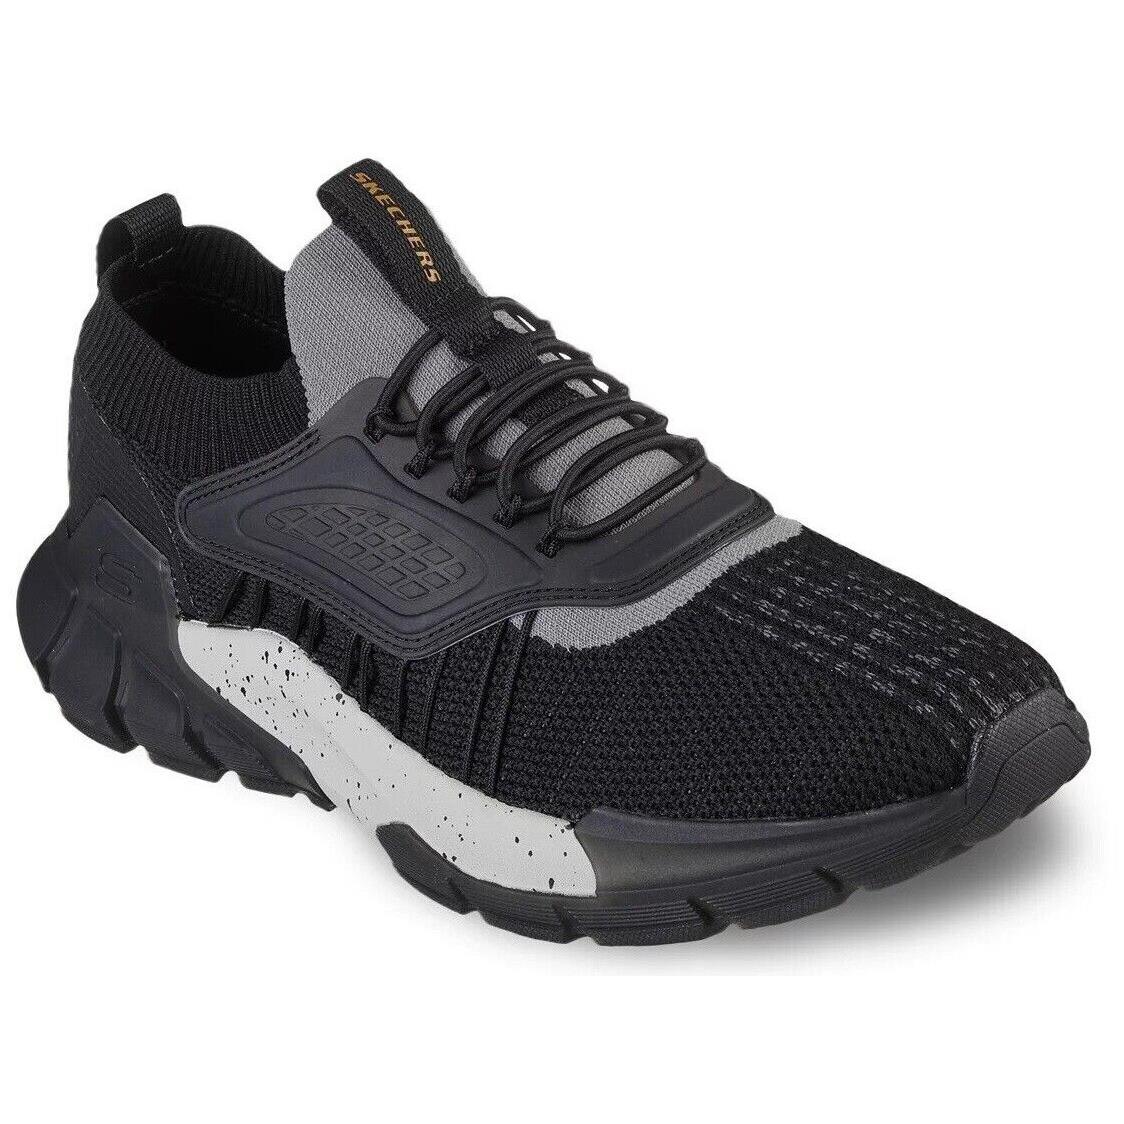 Mens Skechers RX Fit Romello Varsper Casual Shoes 210421 /blk Multi Sizes Black - Knit